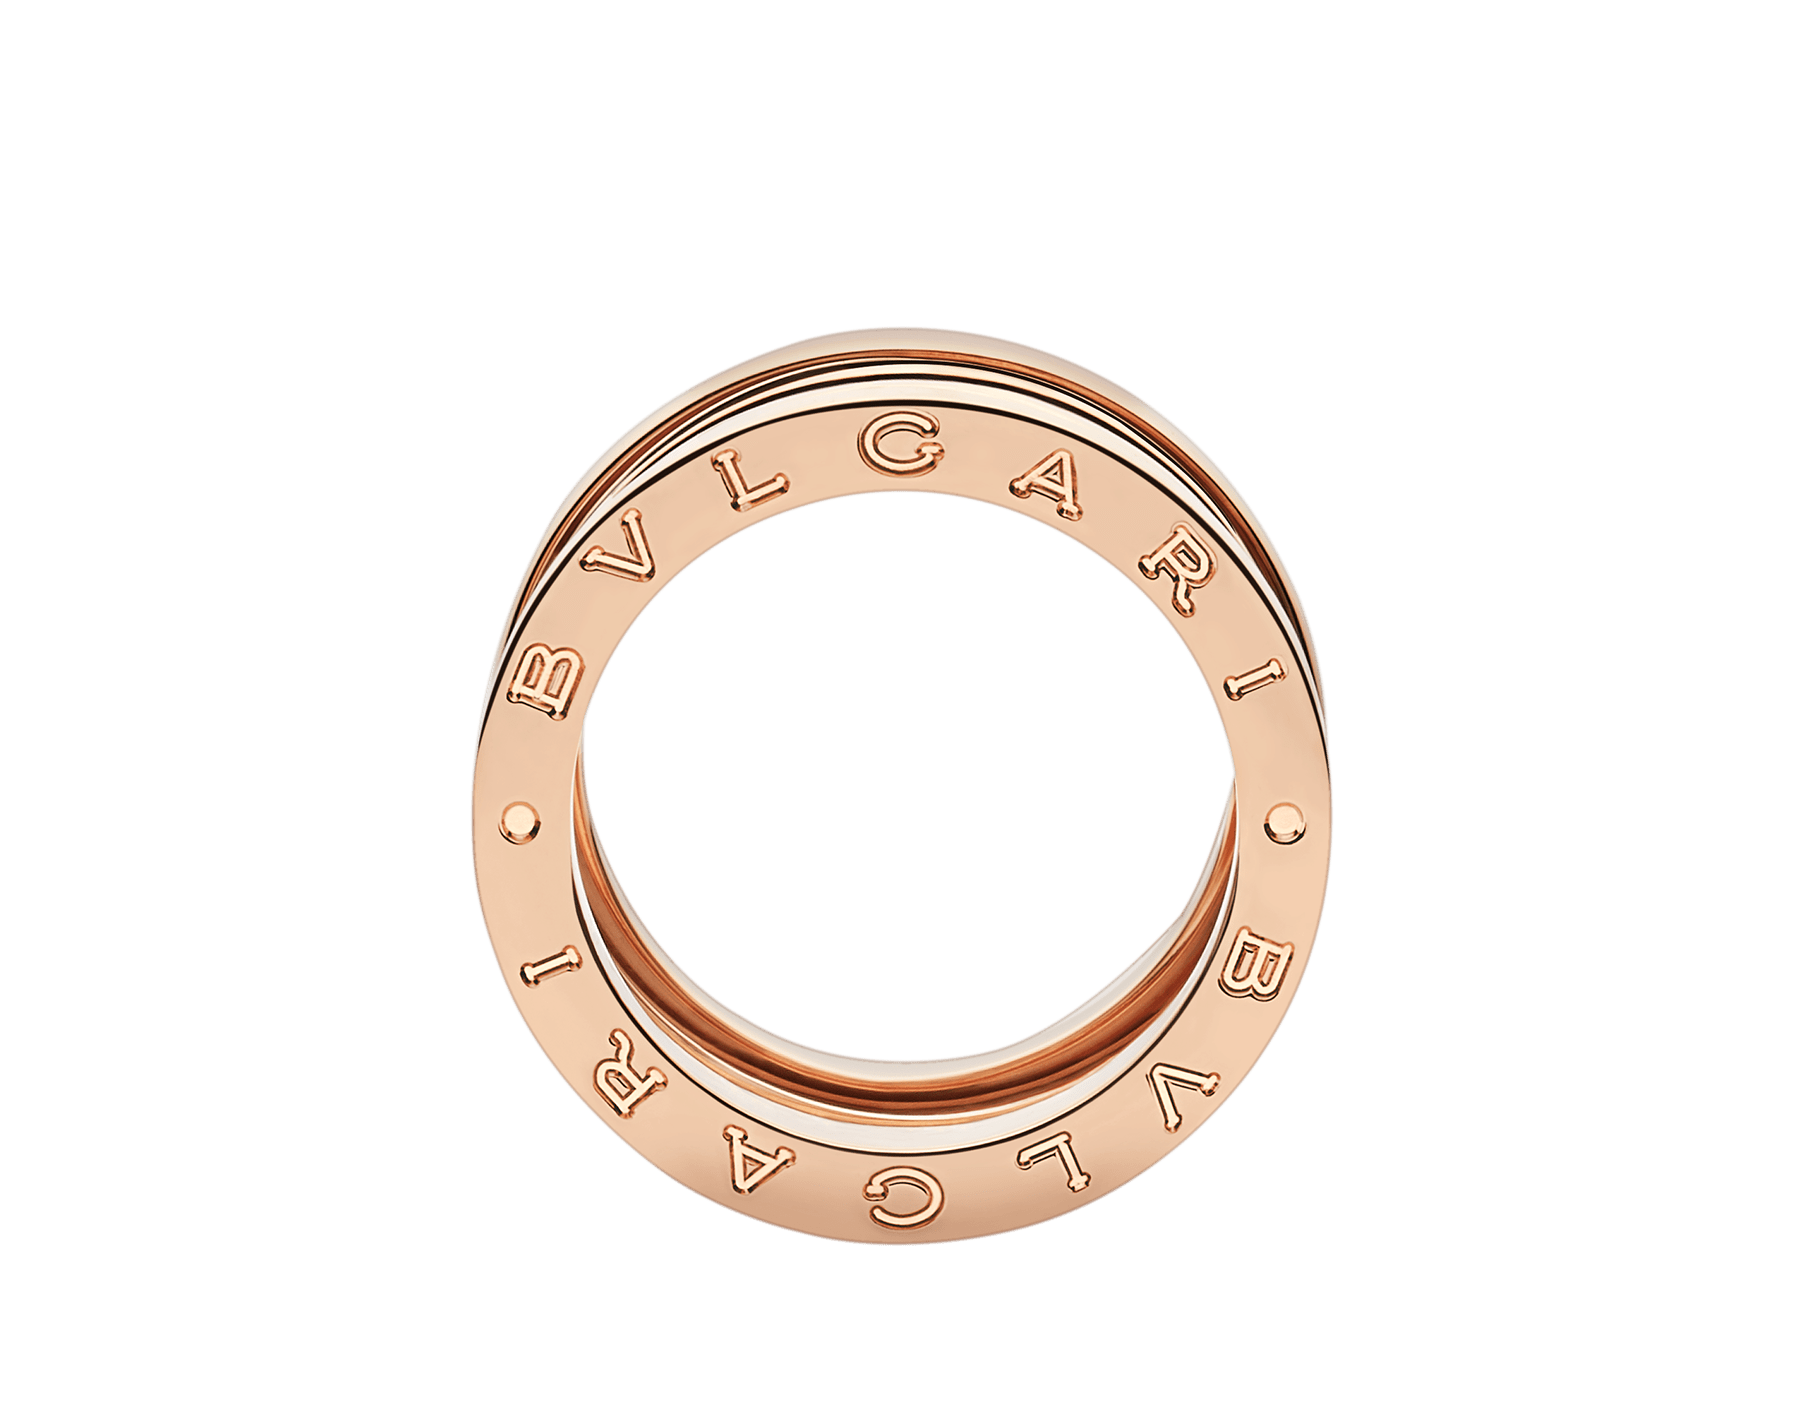 Sale > bvlgari gold ring > in stock